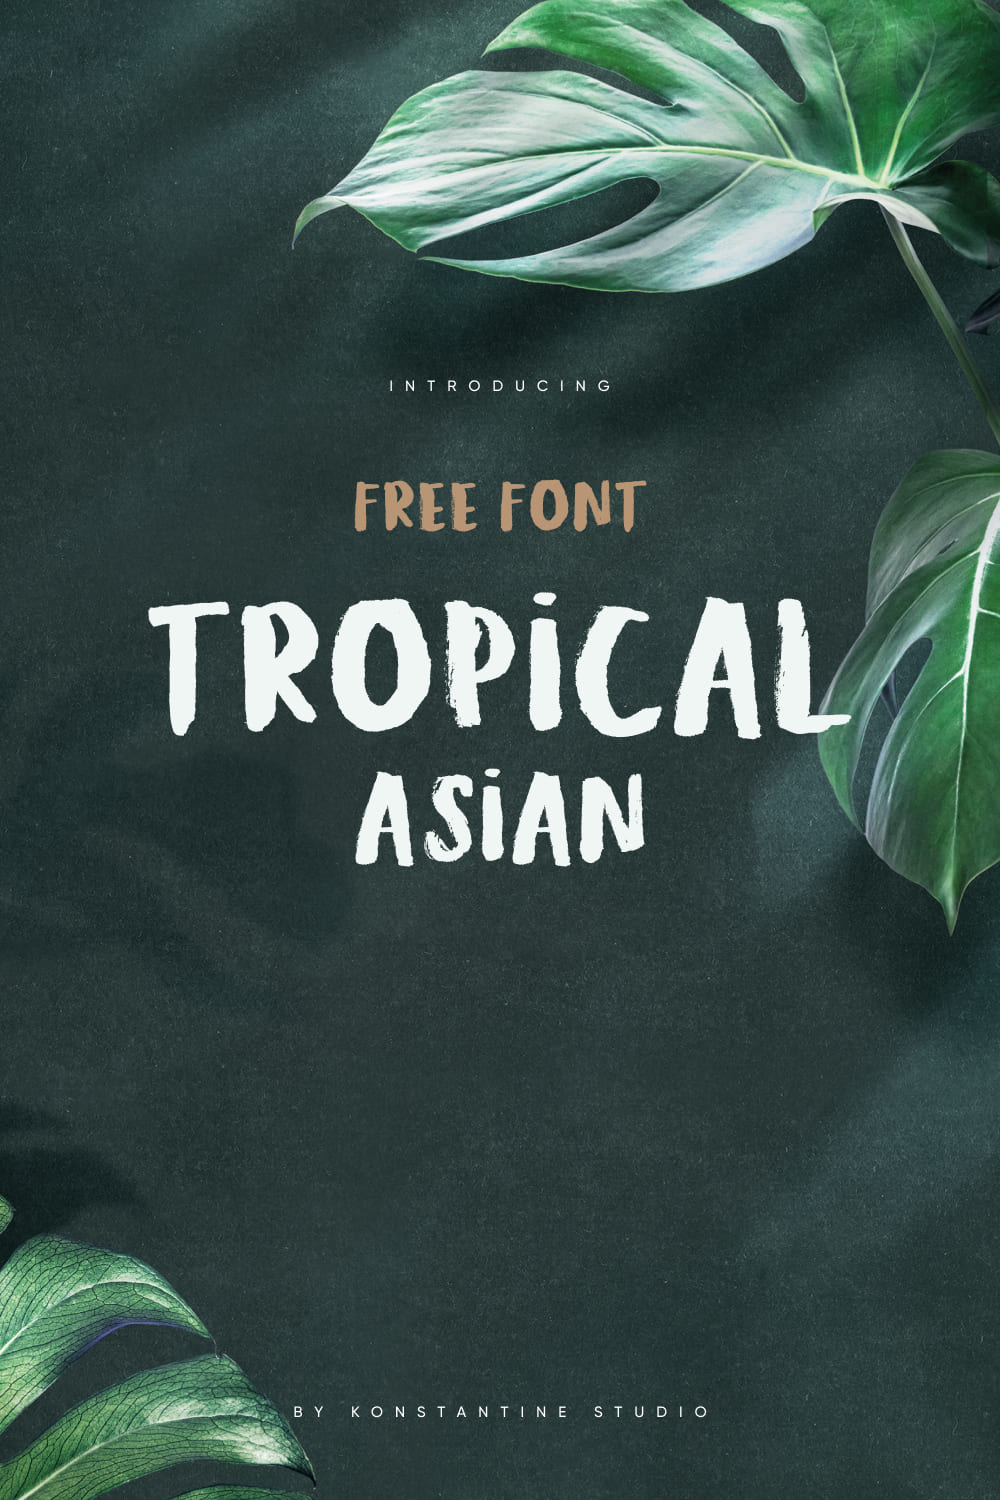 Tropical Asian Free Font Pinterest Collage Image by MasterBundles.